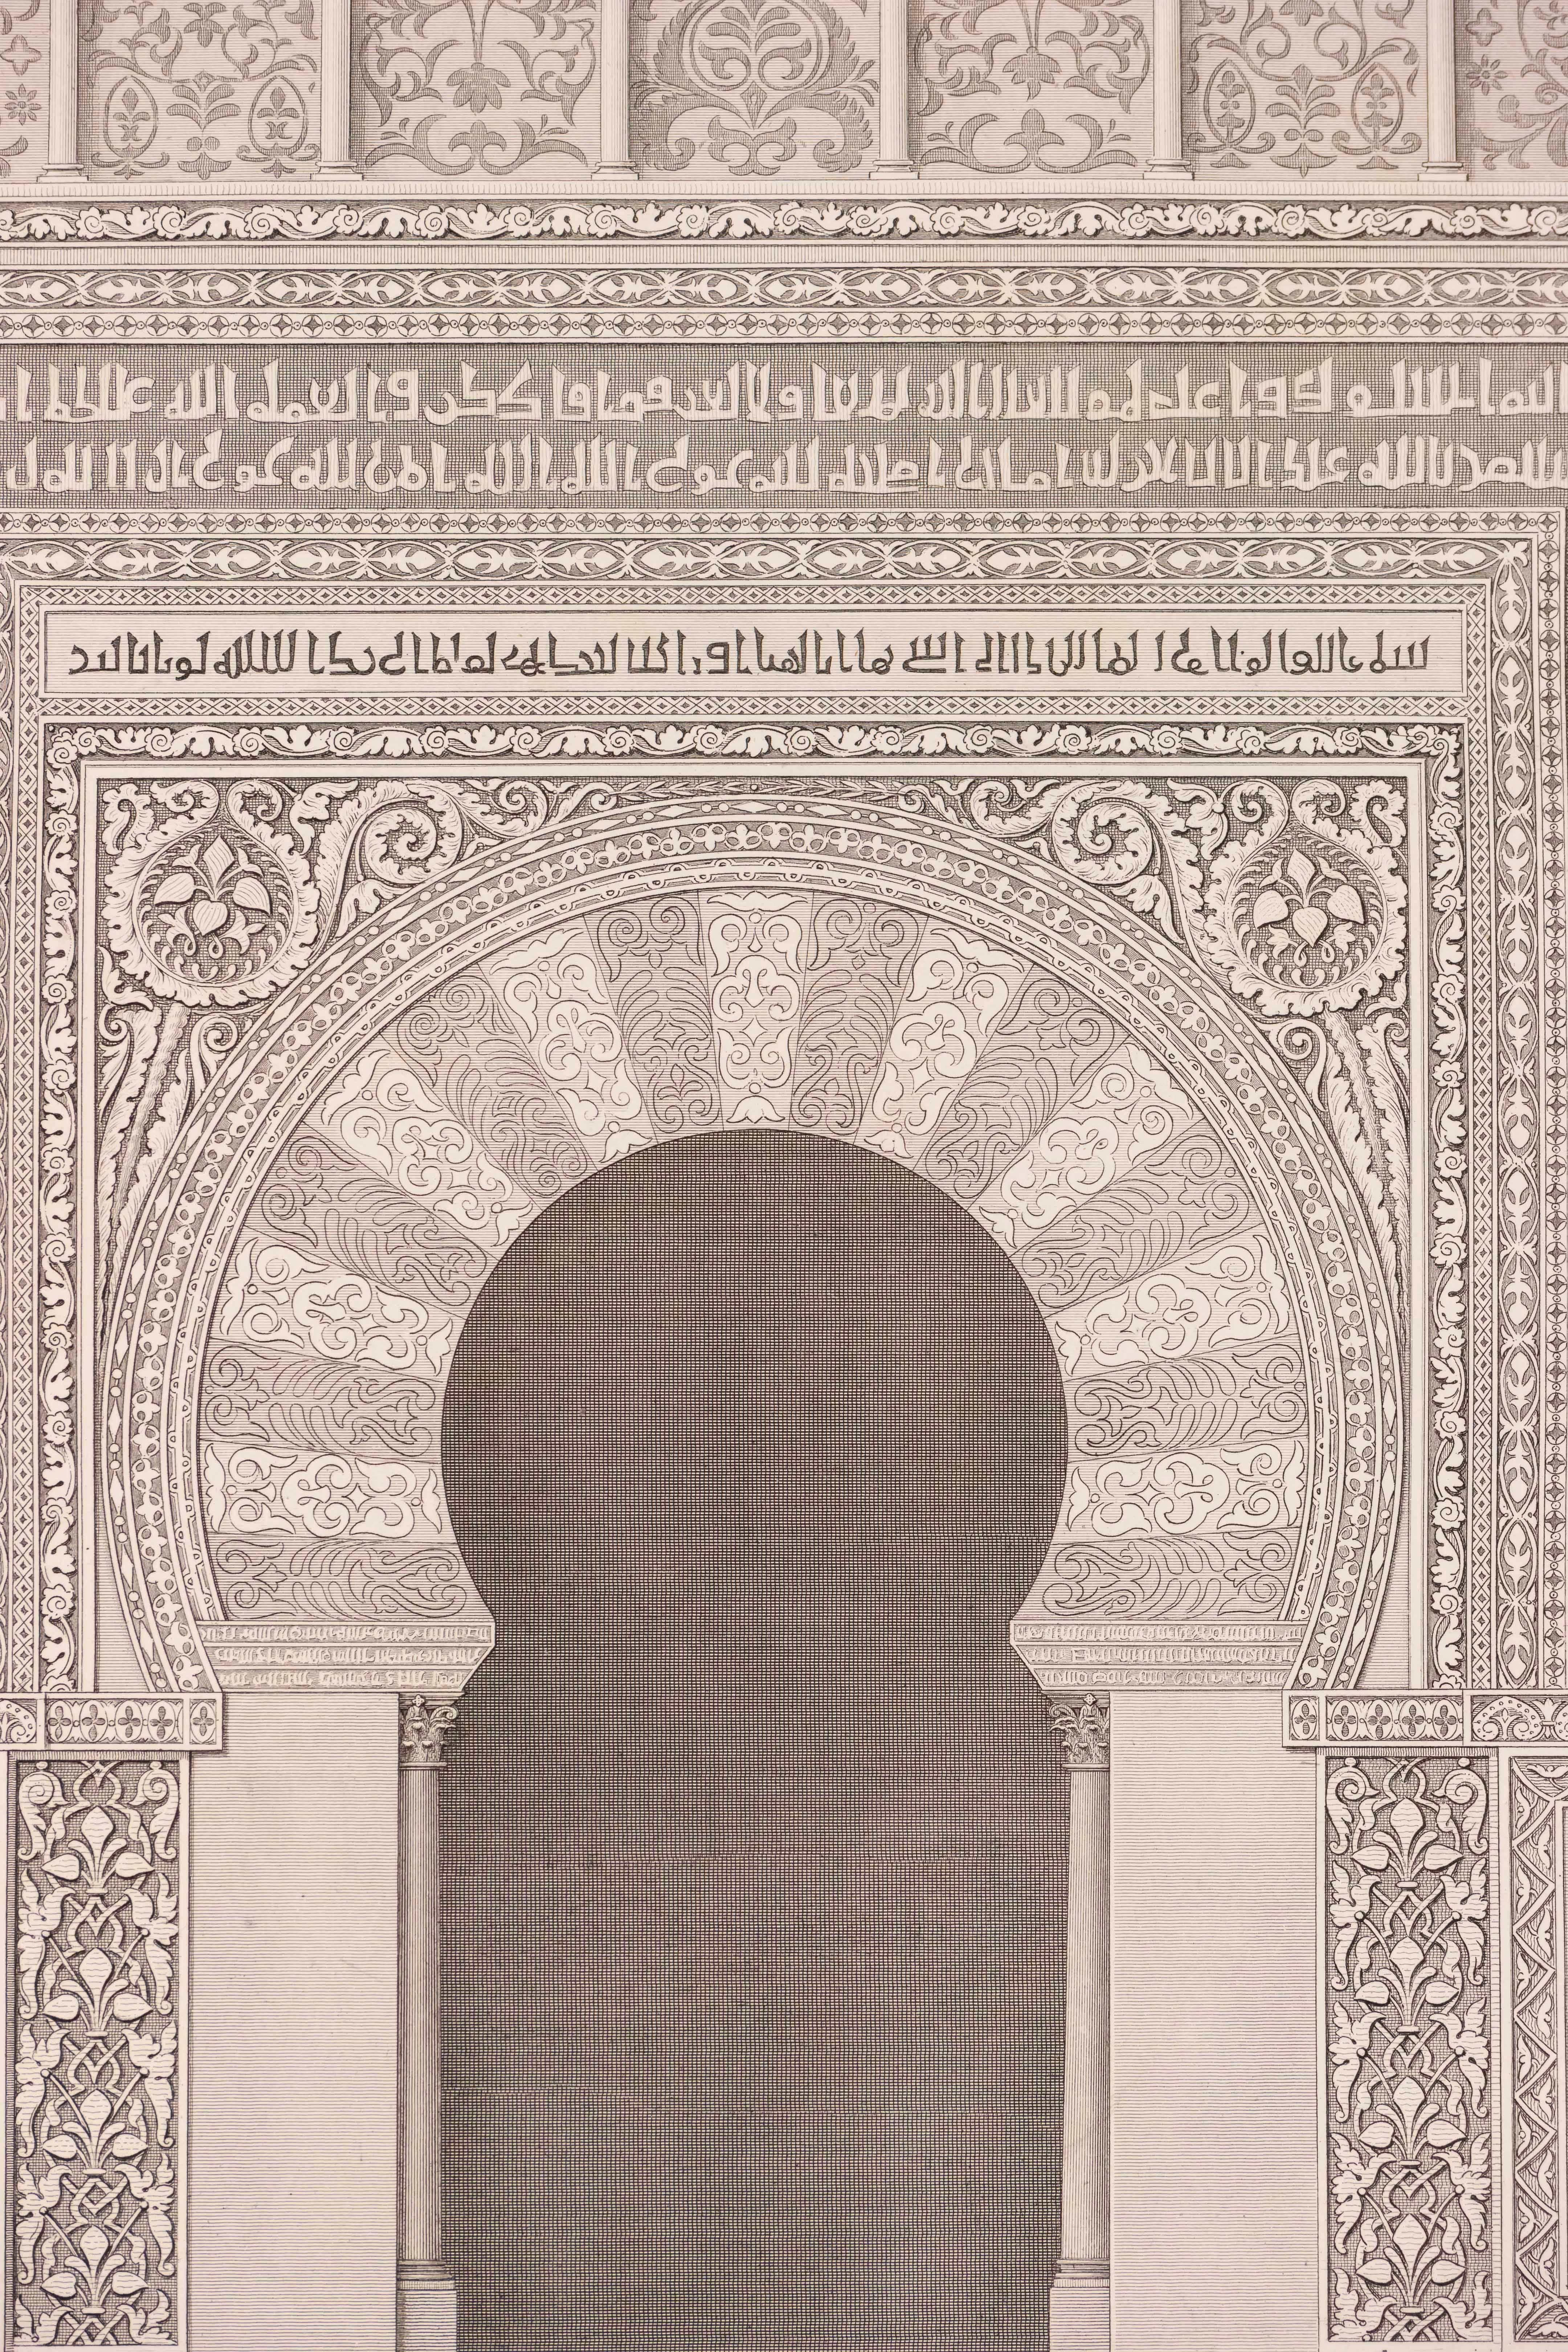 Gate of the Sanctuary of the Koran - Print by J. C. Murphy